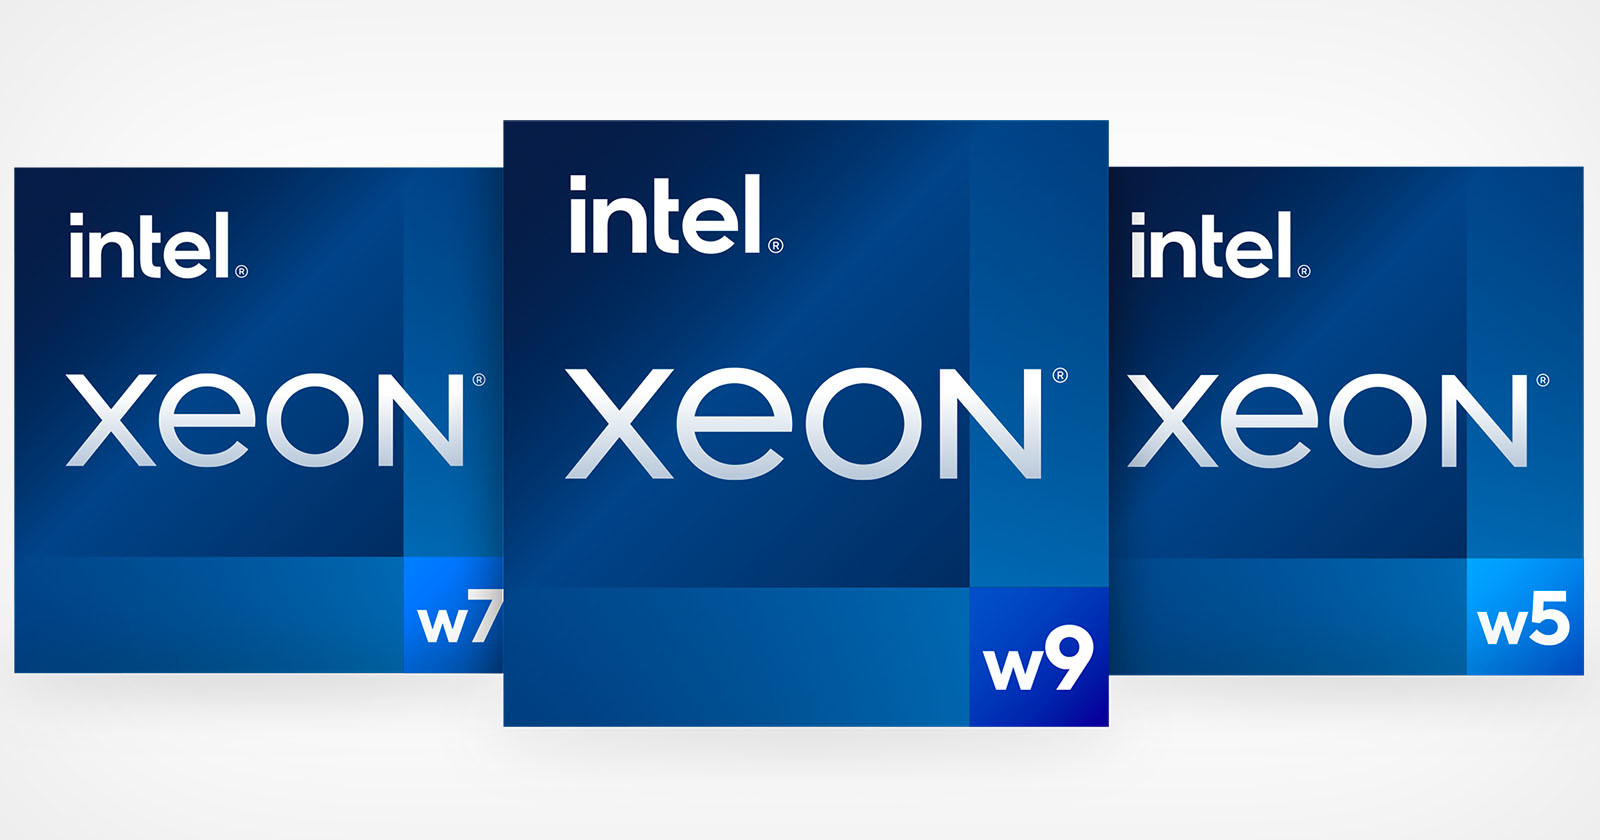  intel announces xeon processors professional workstations 